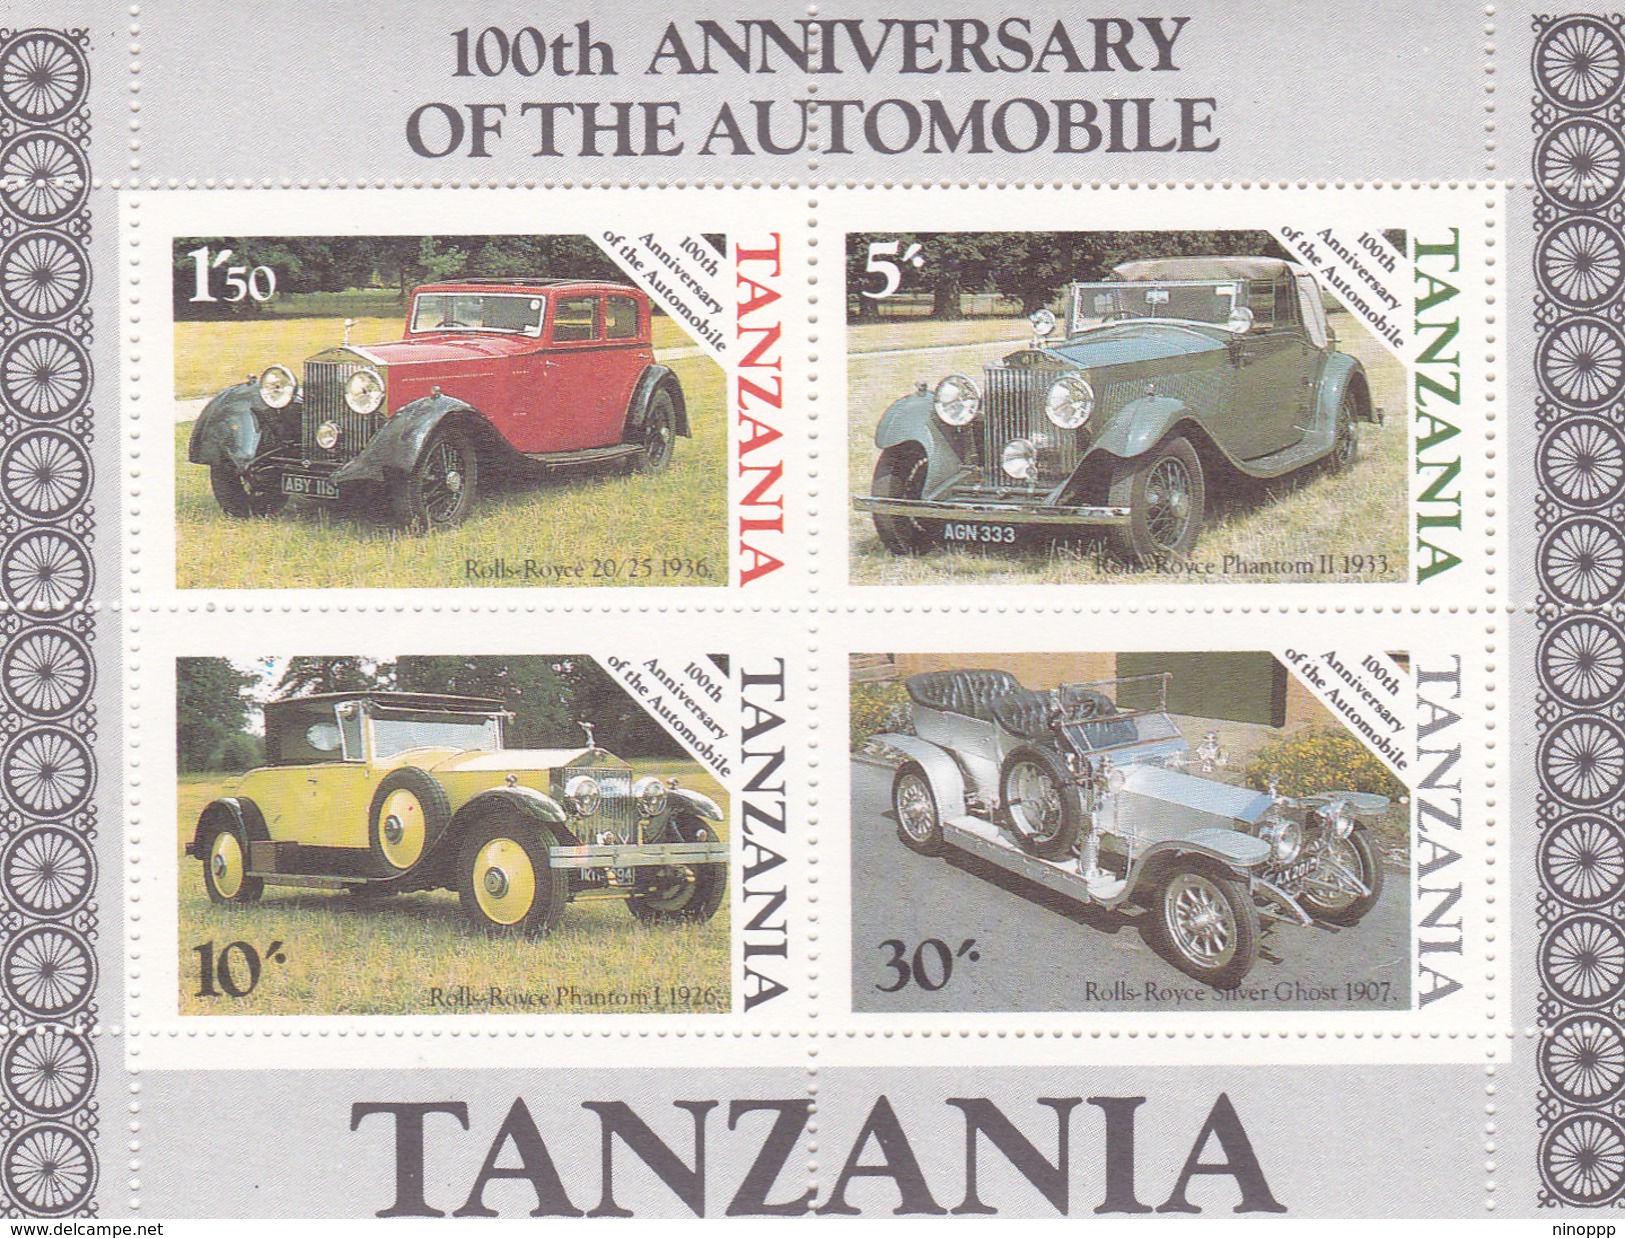 Tanzania 1985 Automobile Centenary Set Miniature Sheet MNH - Cars